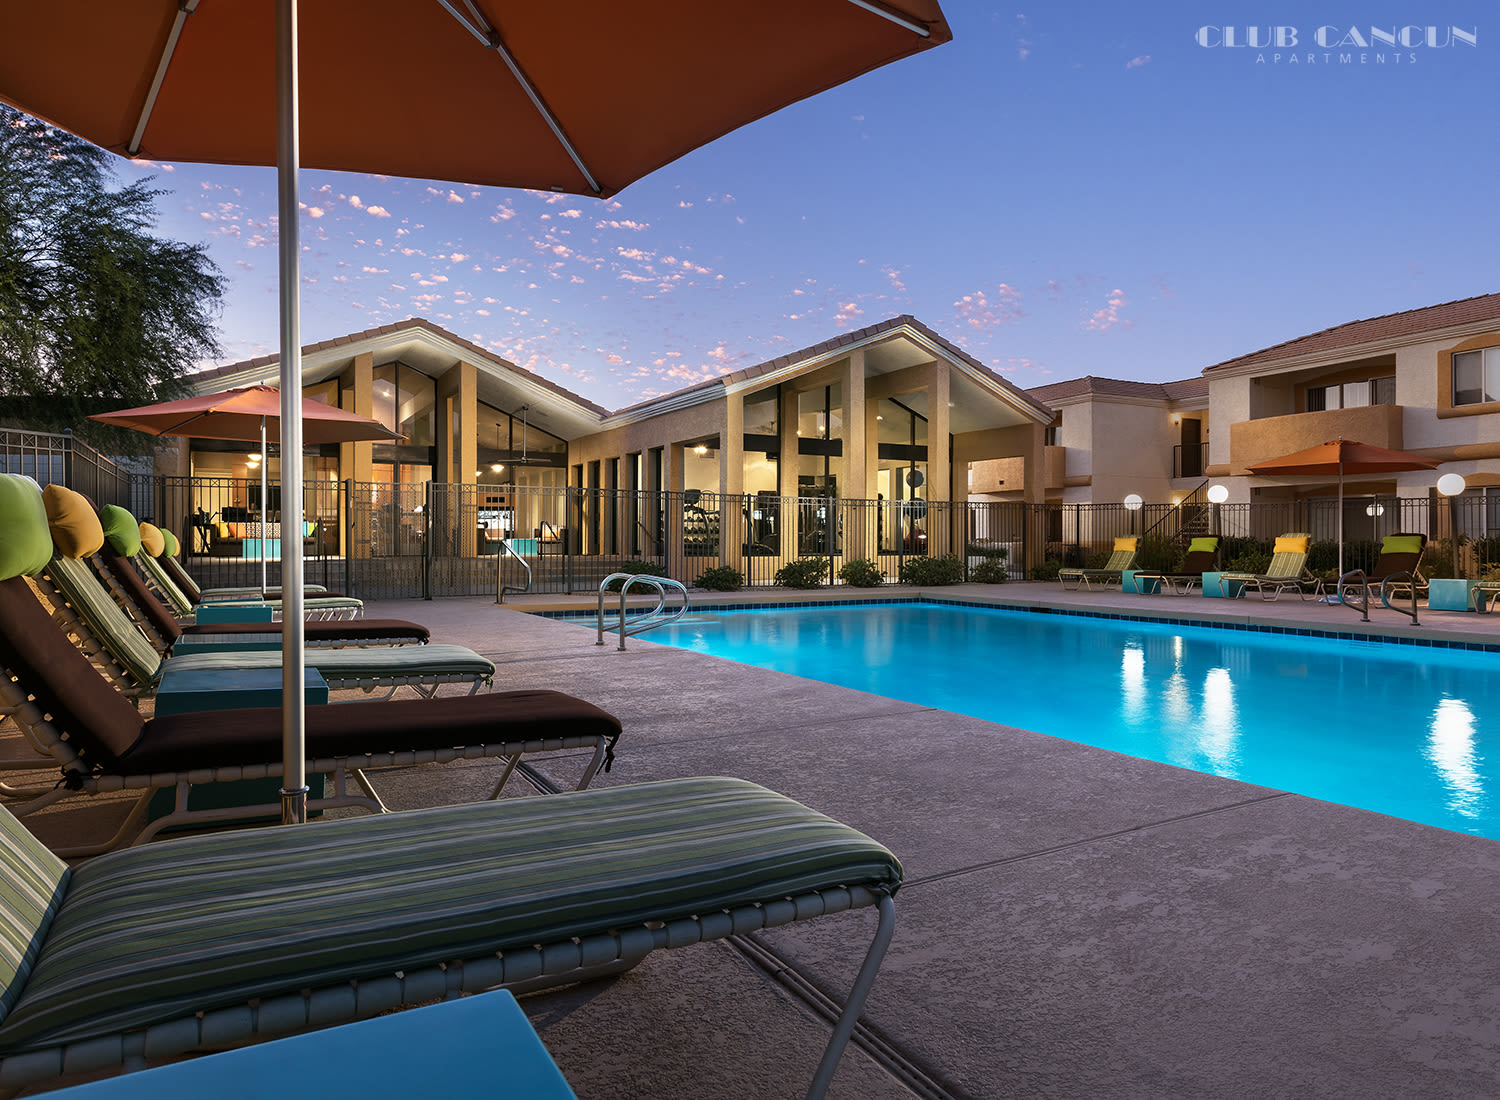 Club Cancun apartments in Chandler, Arizona